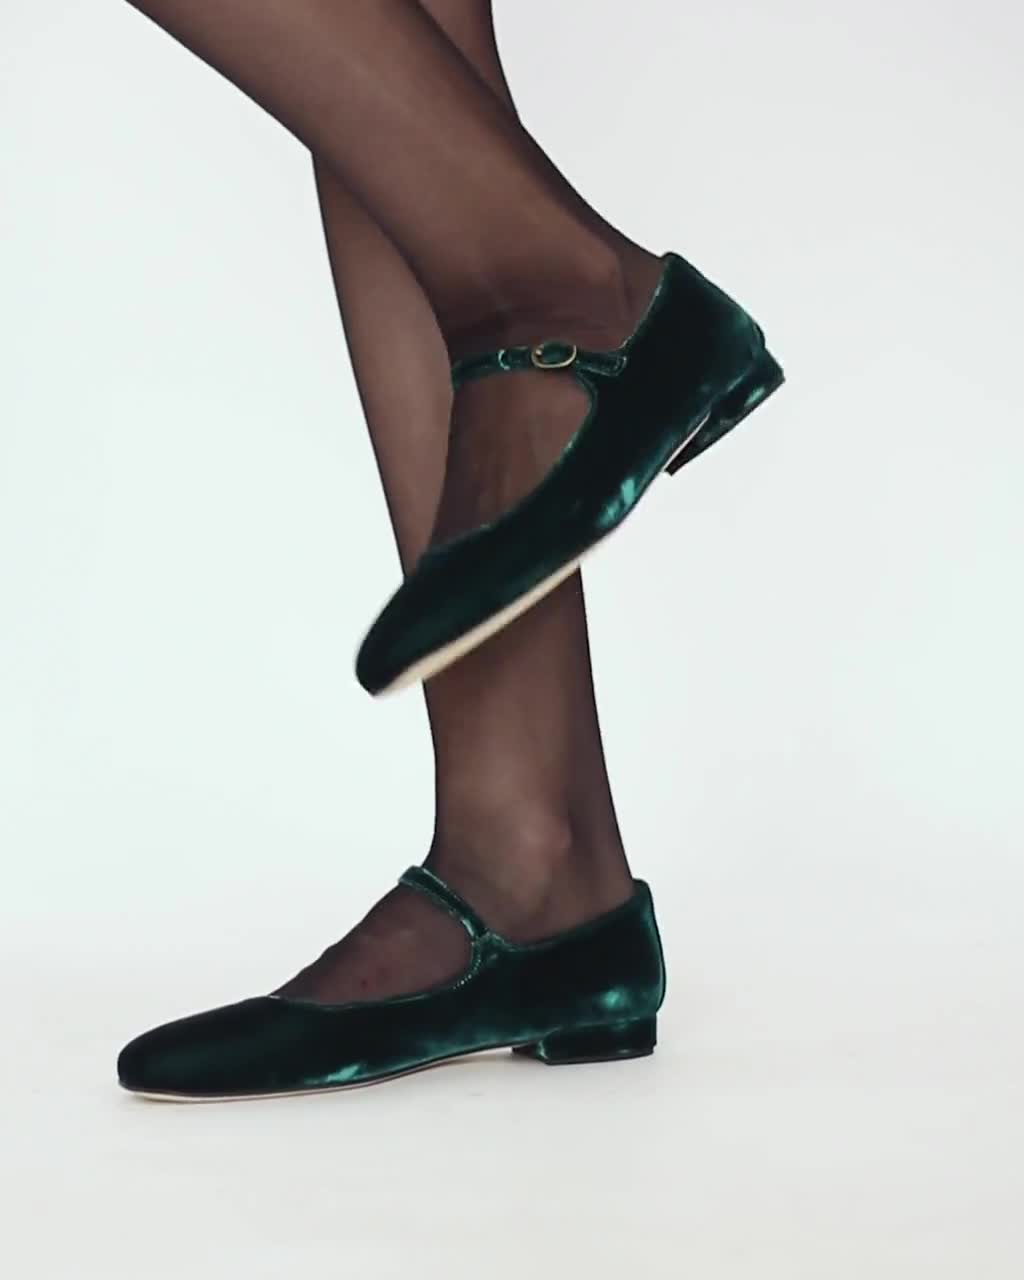 Colette Mary Jane flat in Verde velvet shoes low heels Schoenen damesschoenen Mary Janes 